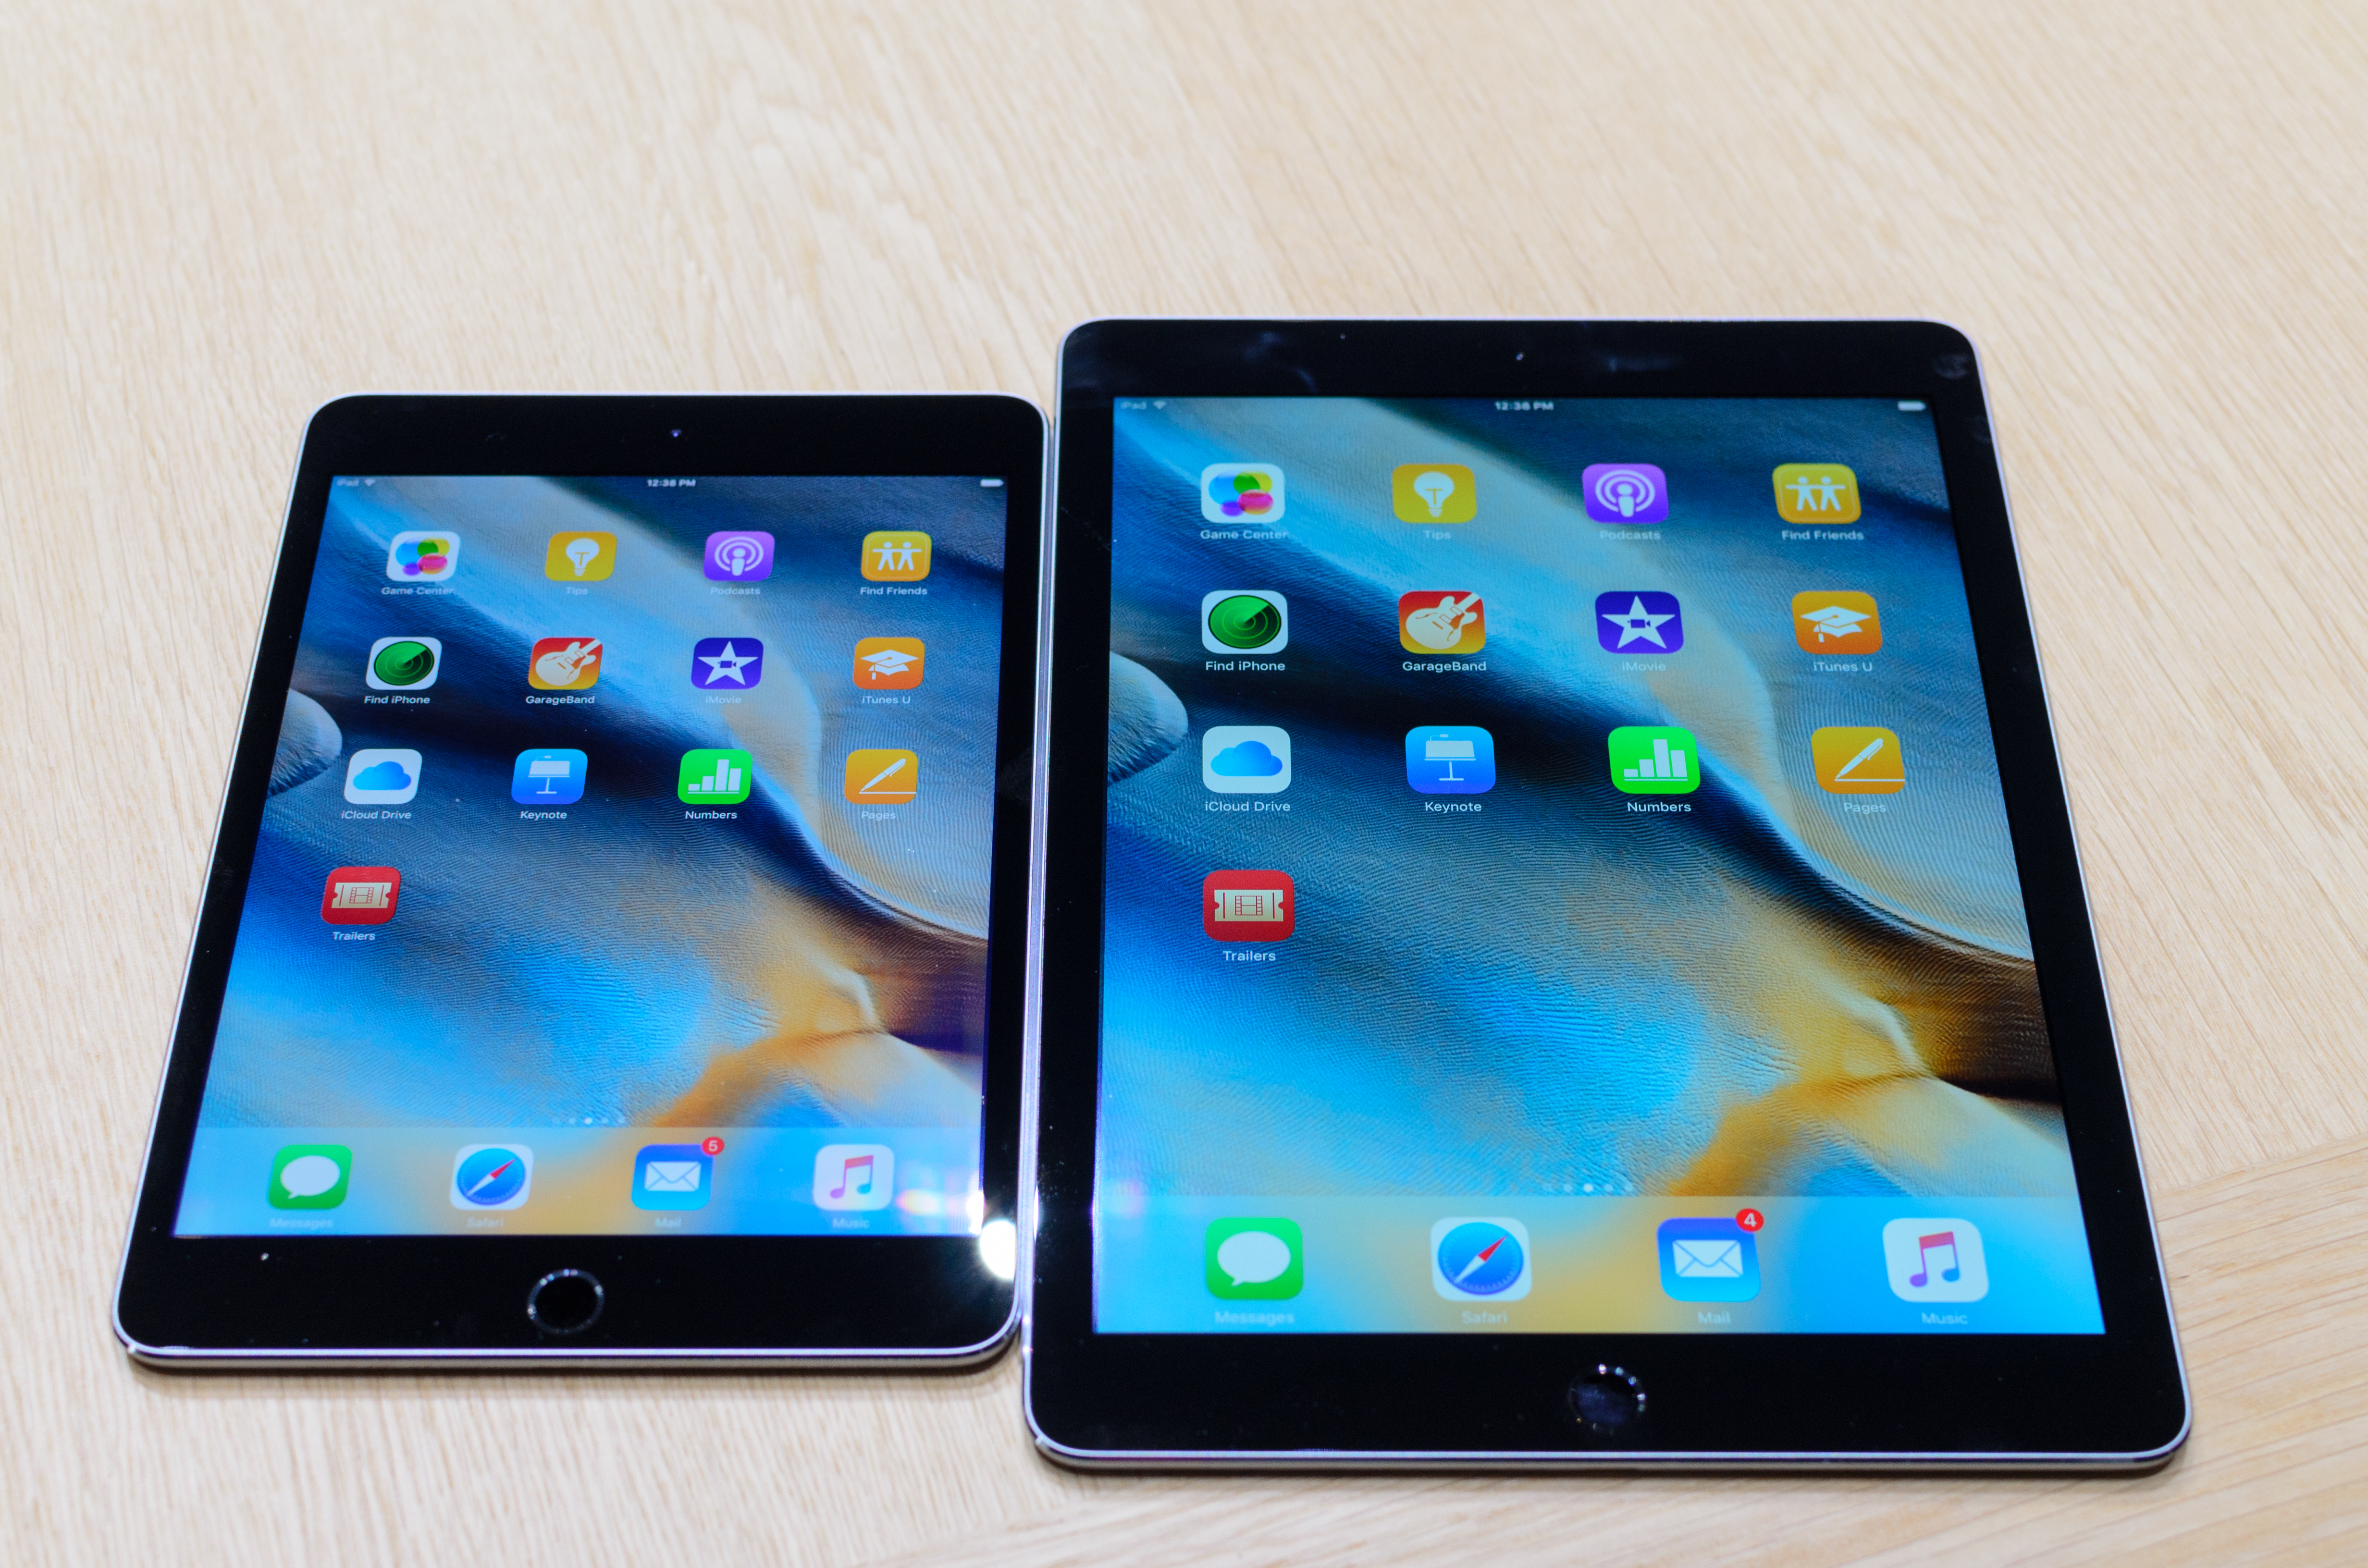 Hands on With the iPad Pro and iPad Mini 4